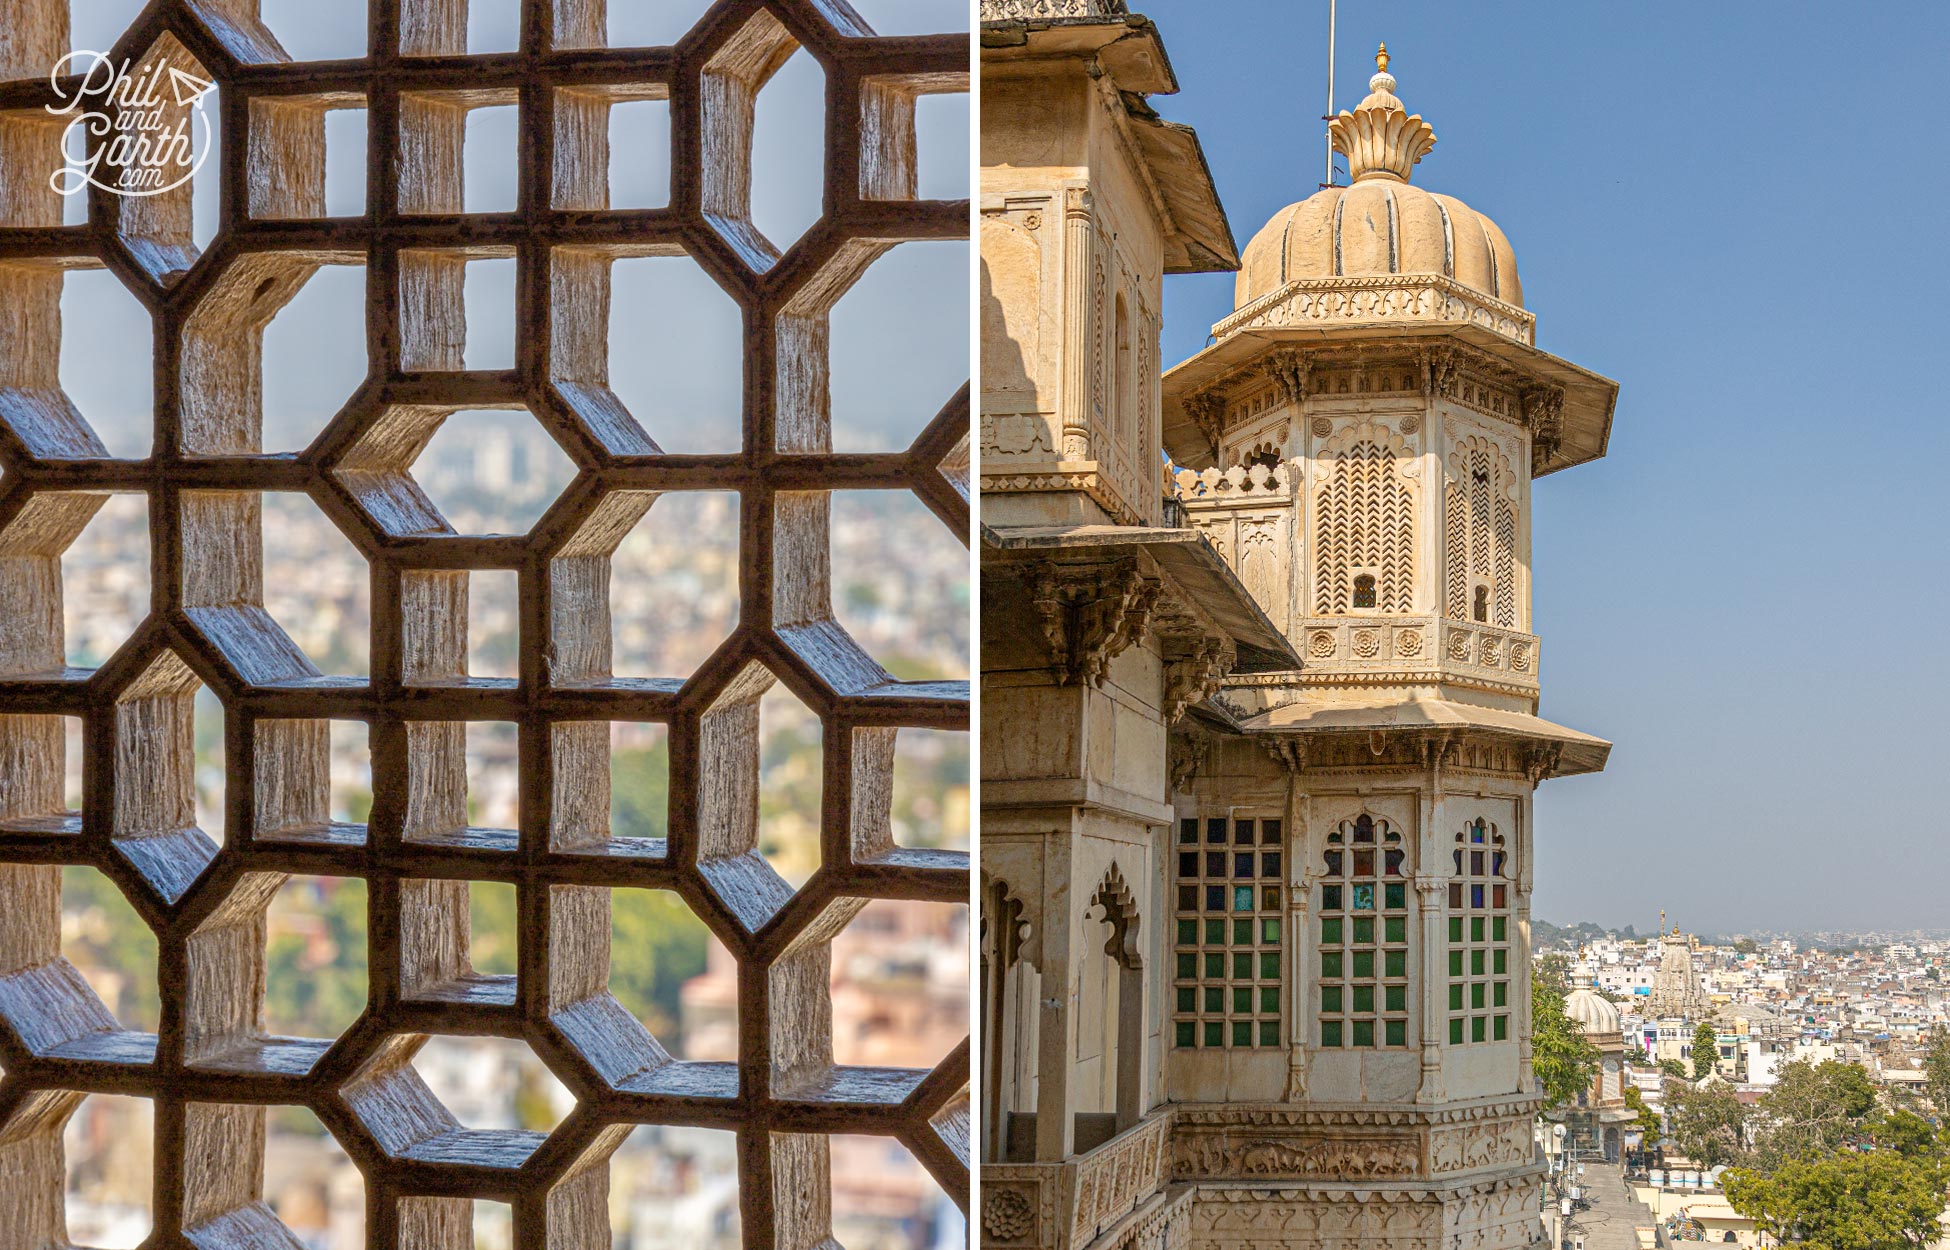 Window views from the Badi Mahal